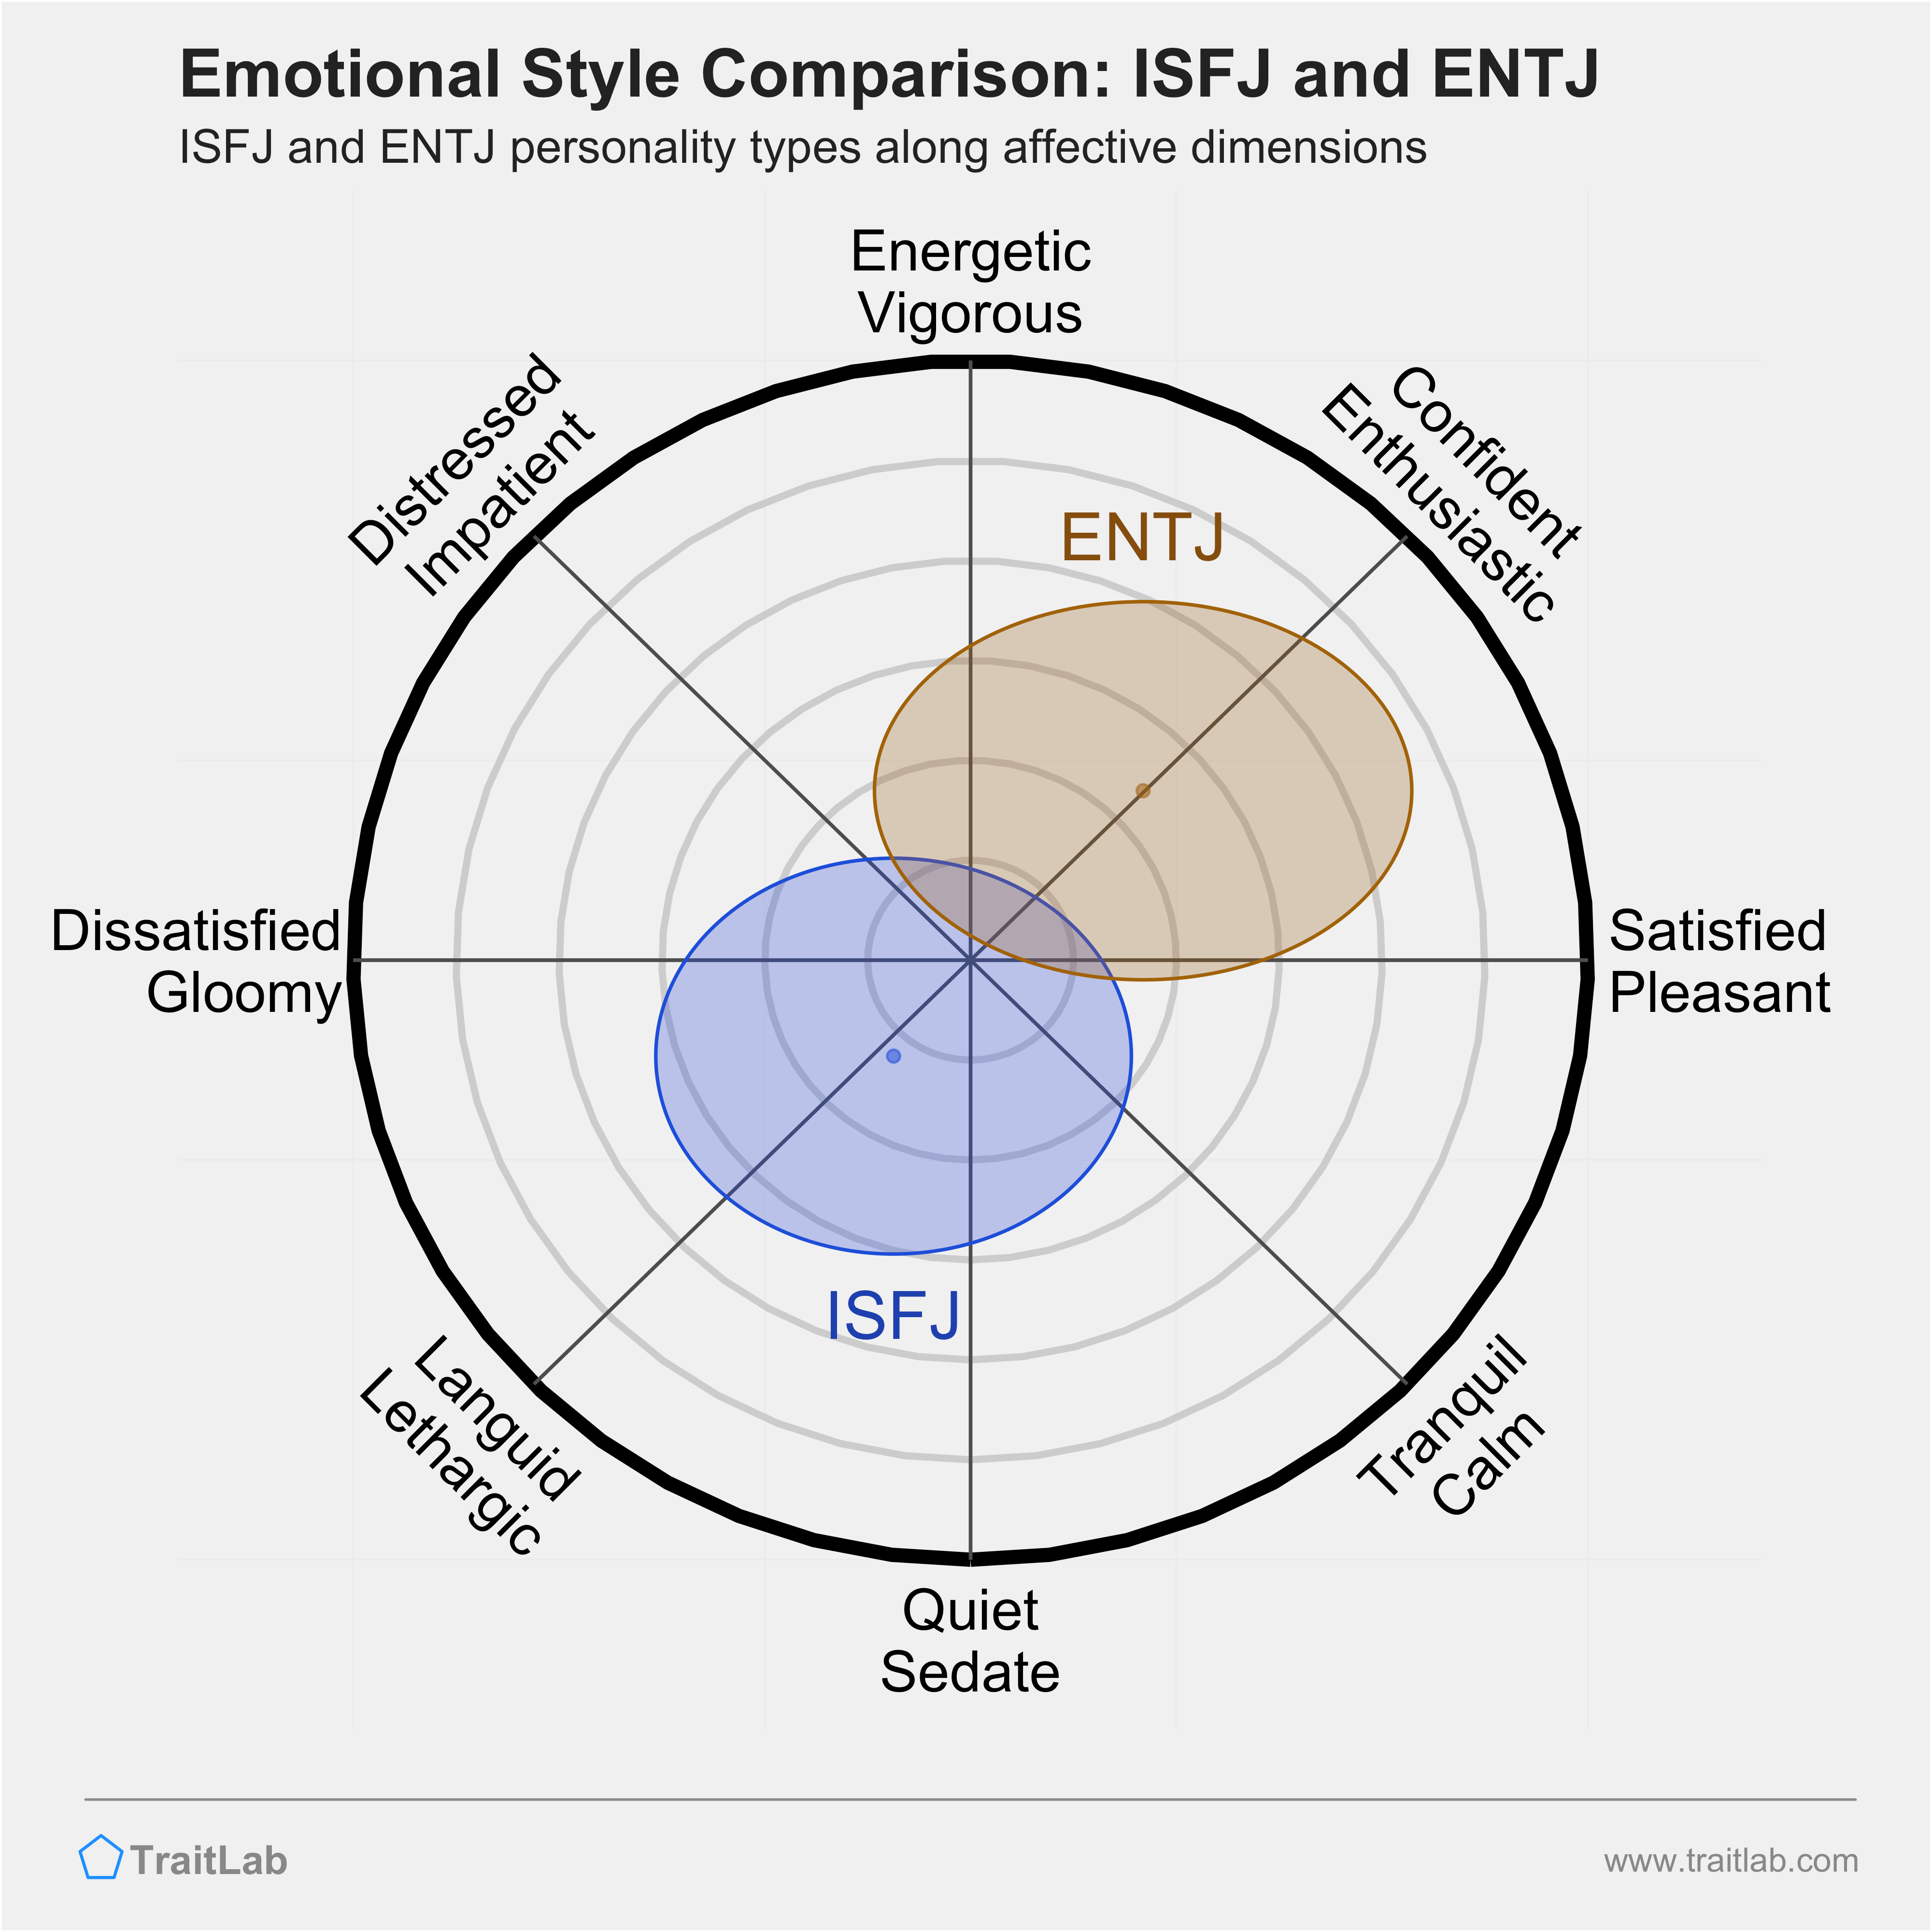 ISFJ and ENTJ comparison across emotional (affective) dimensions